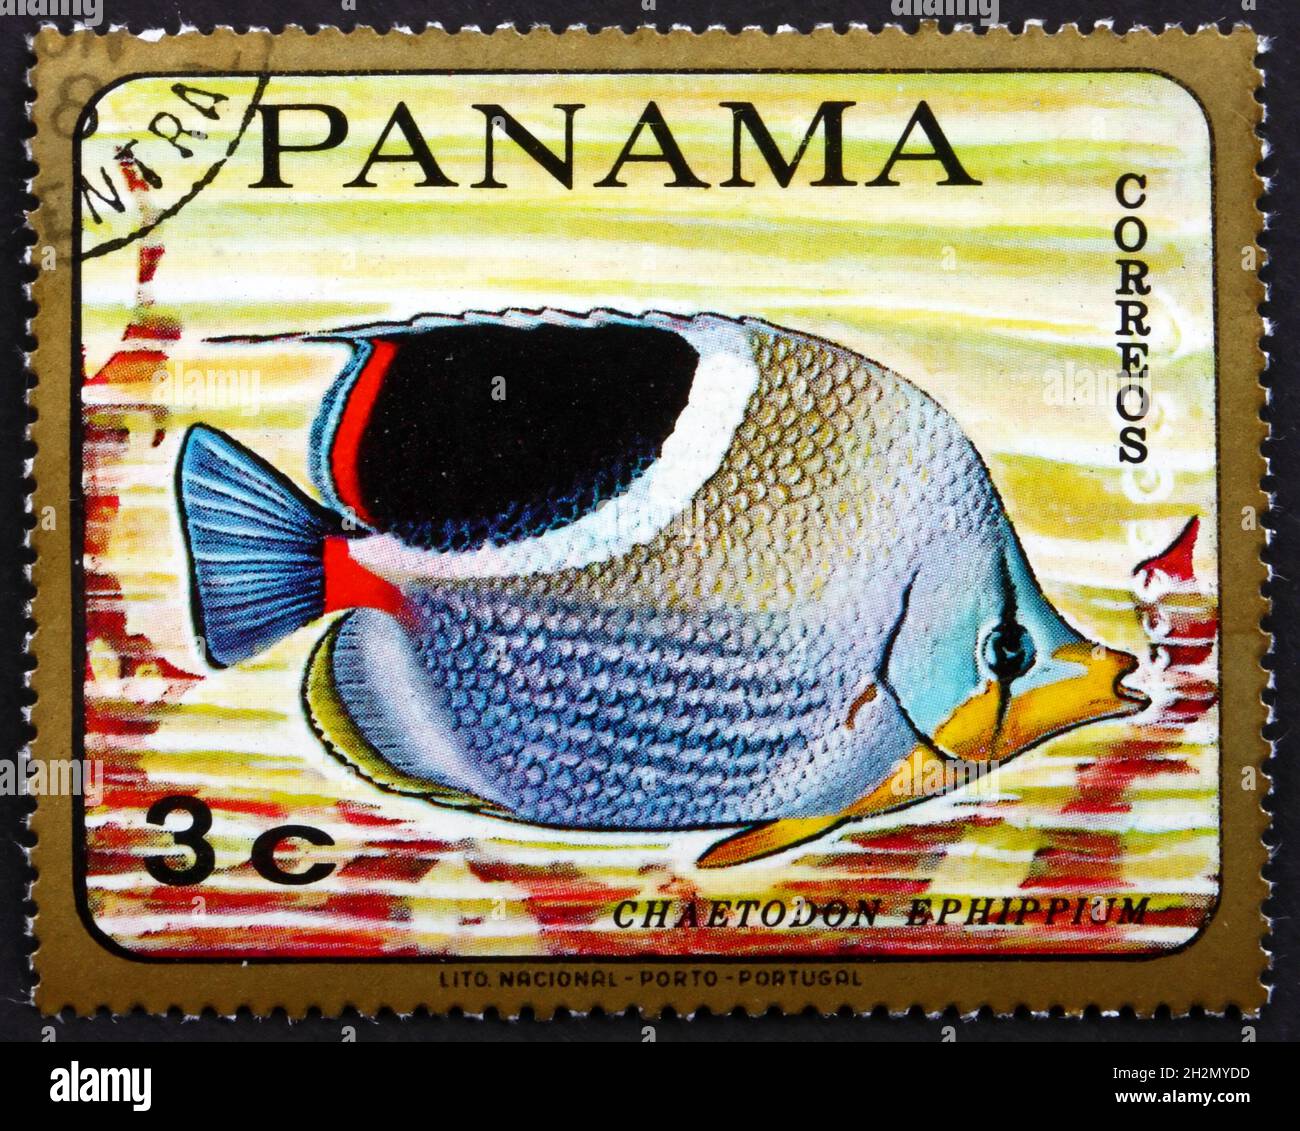 PANAMA - CIRCA 1968: a stamp printed in Panama shows saddle butterflyfish, chaetodon ephippium, tropical fish, circa 1968 Stock Photo